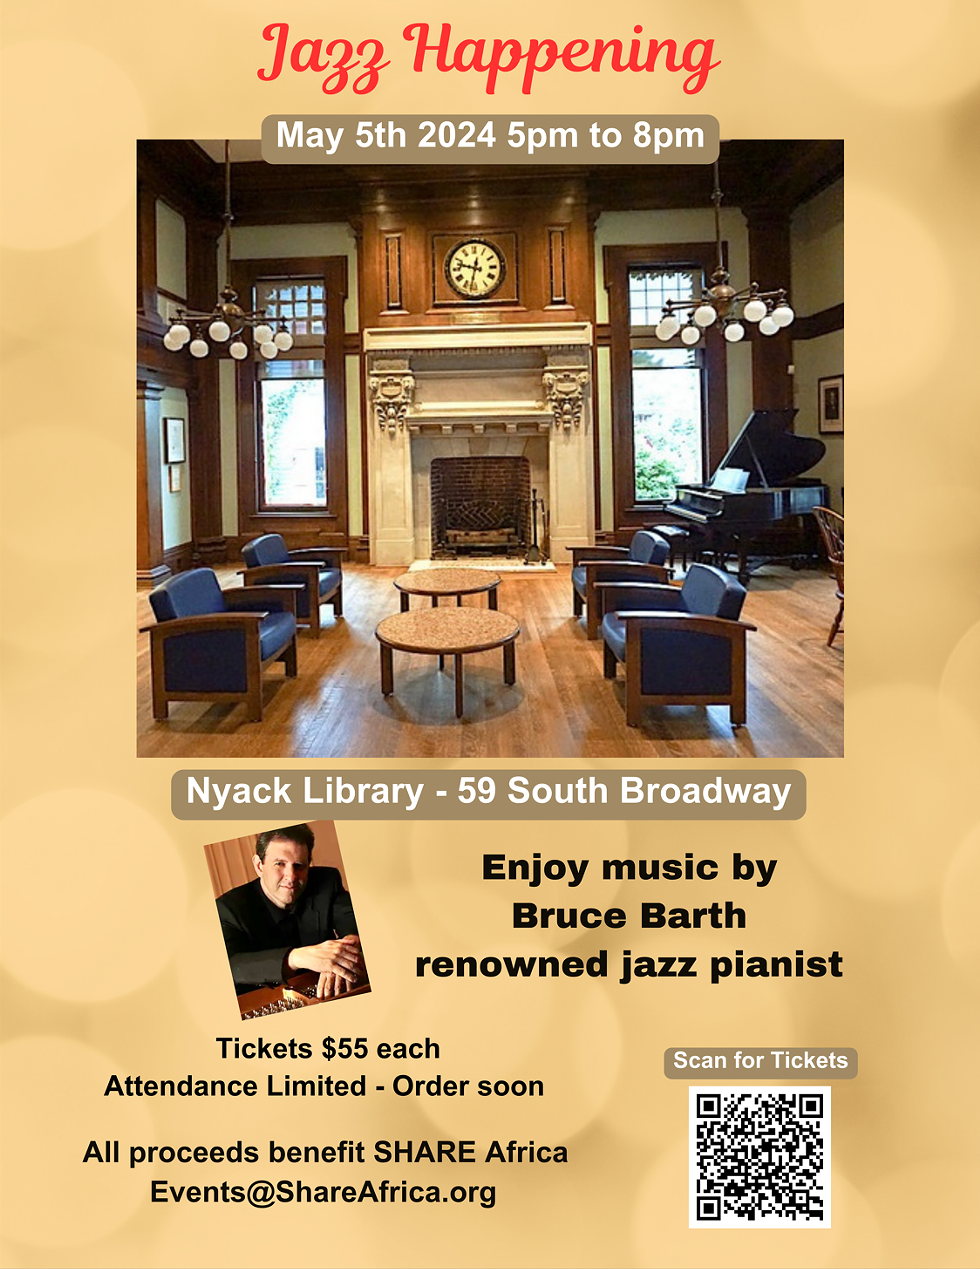 Bruce Barth, Jazz Pianist to perform at SHARE Jazz Happening at Nyack Library